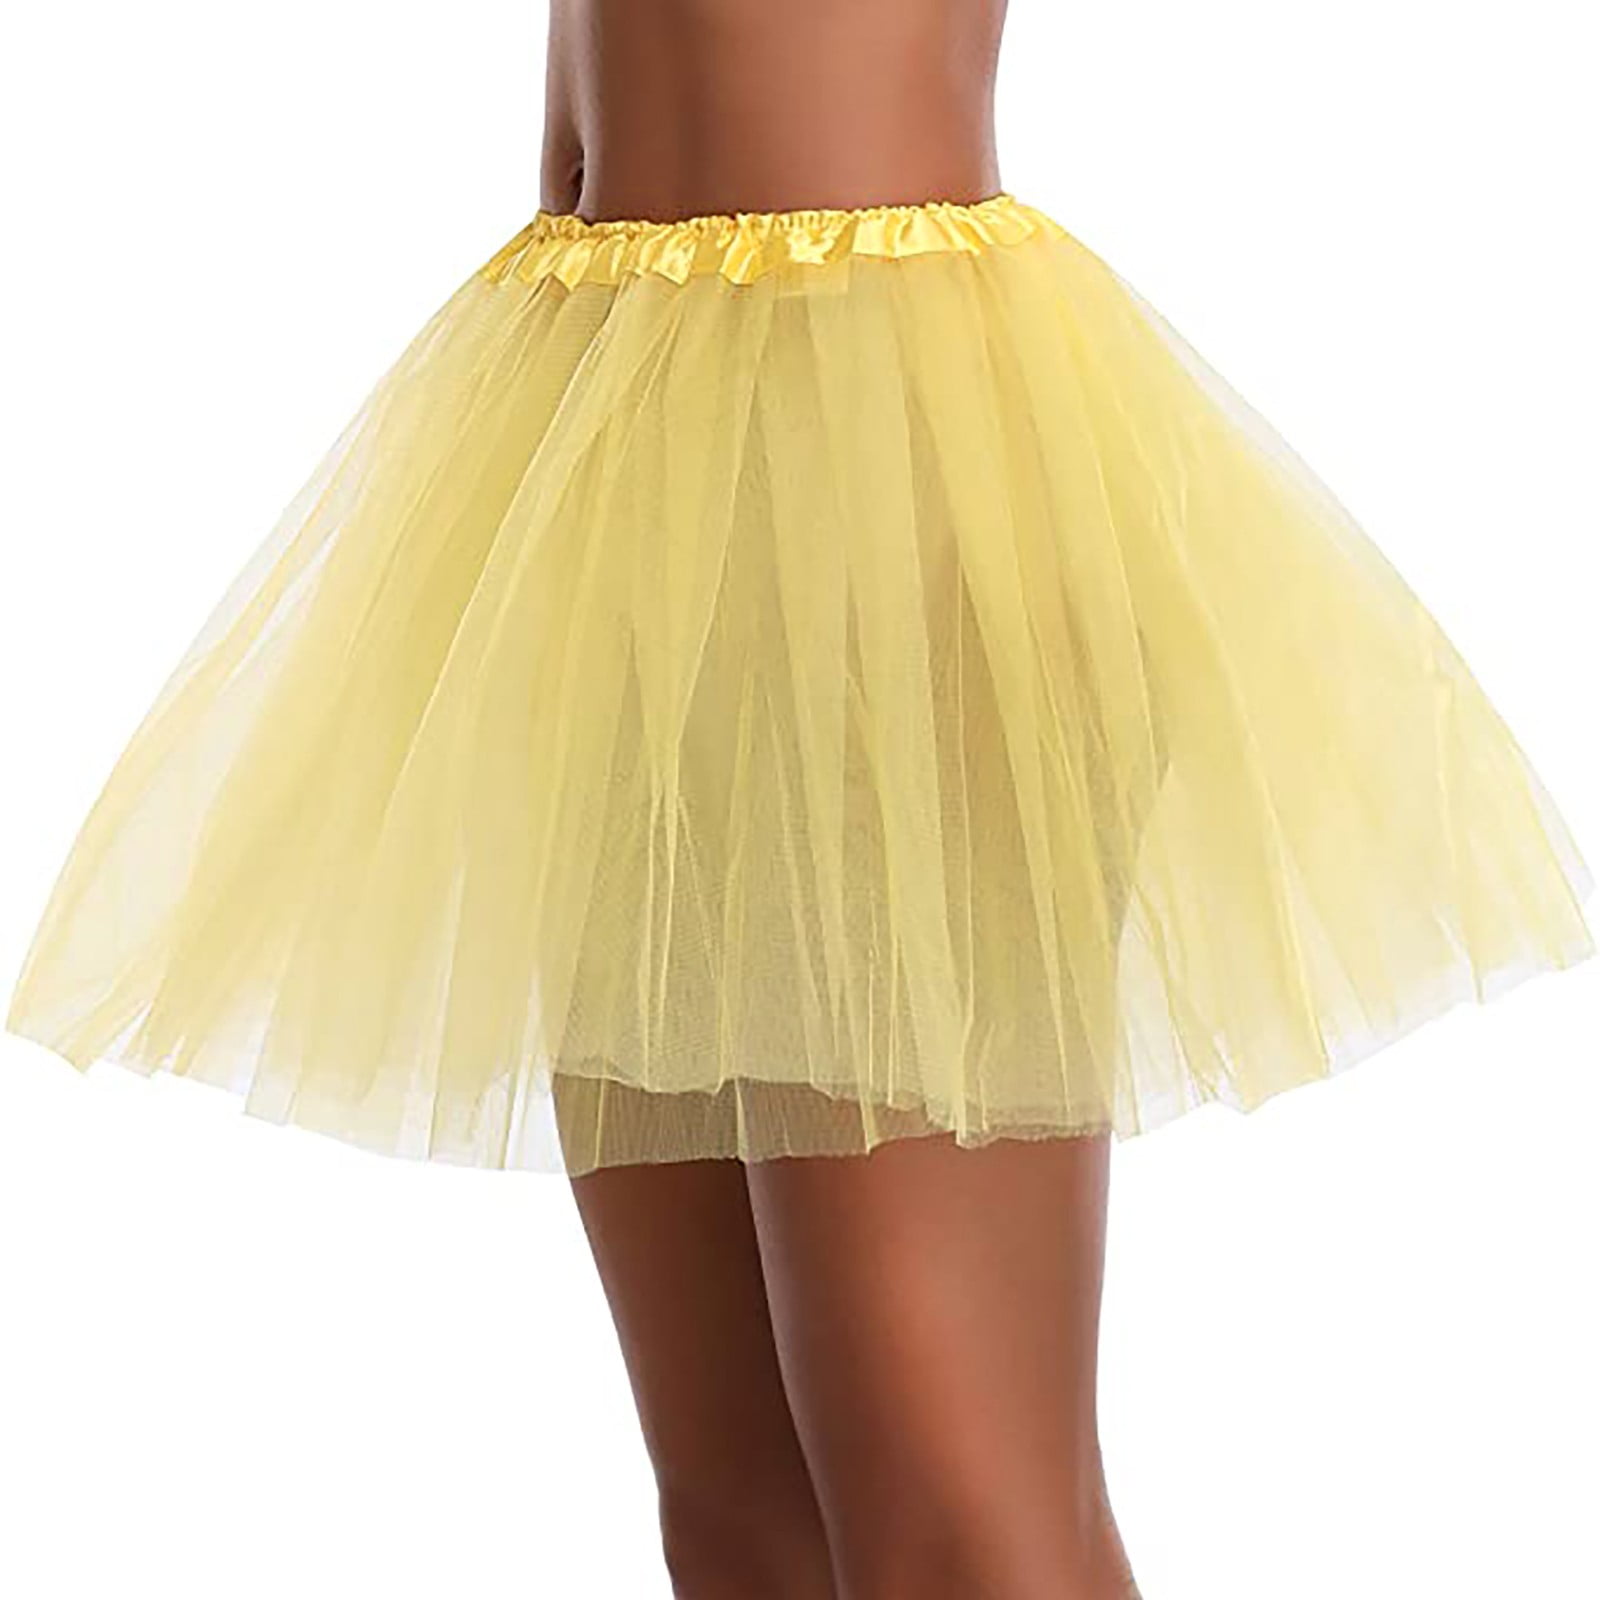 SBYOJLPB Women'S Skirts Womens High Quality Pleated Gauze Short Skirt ...